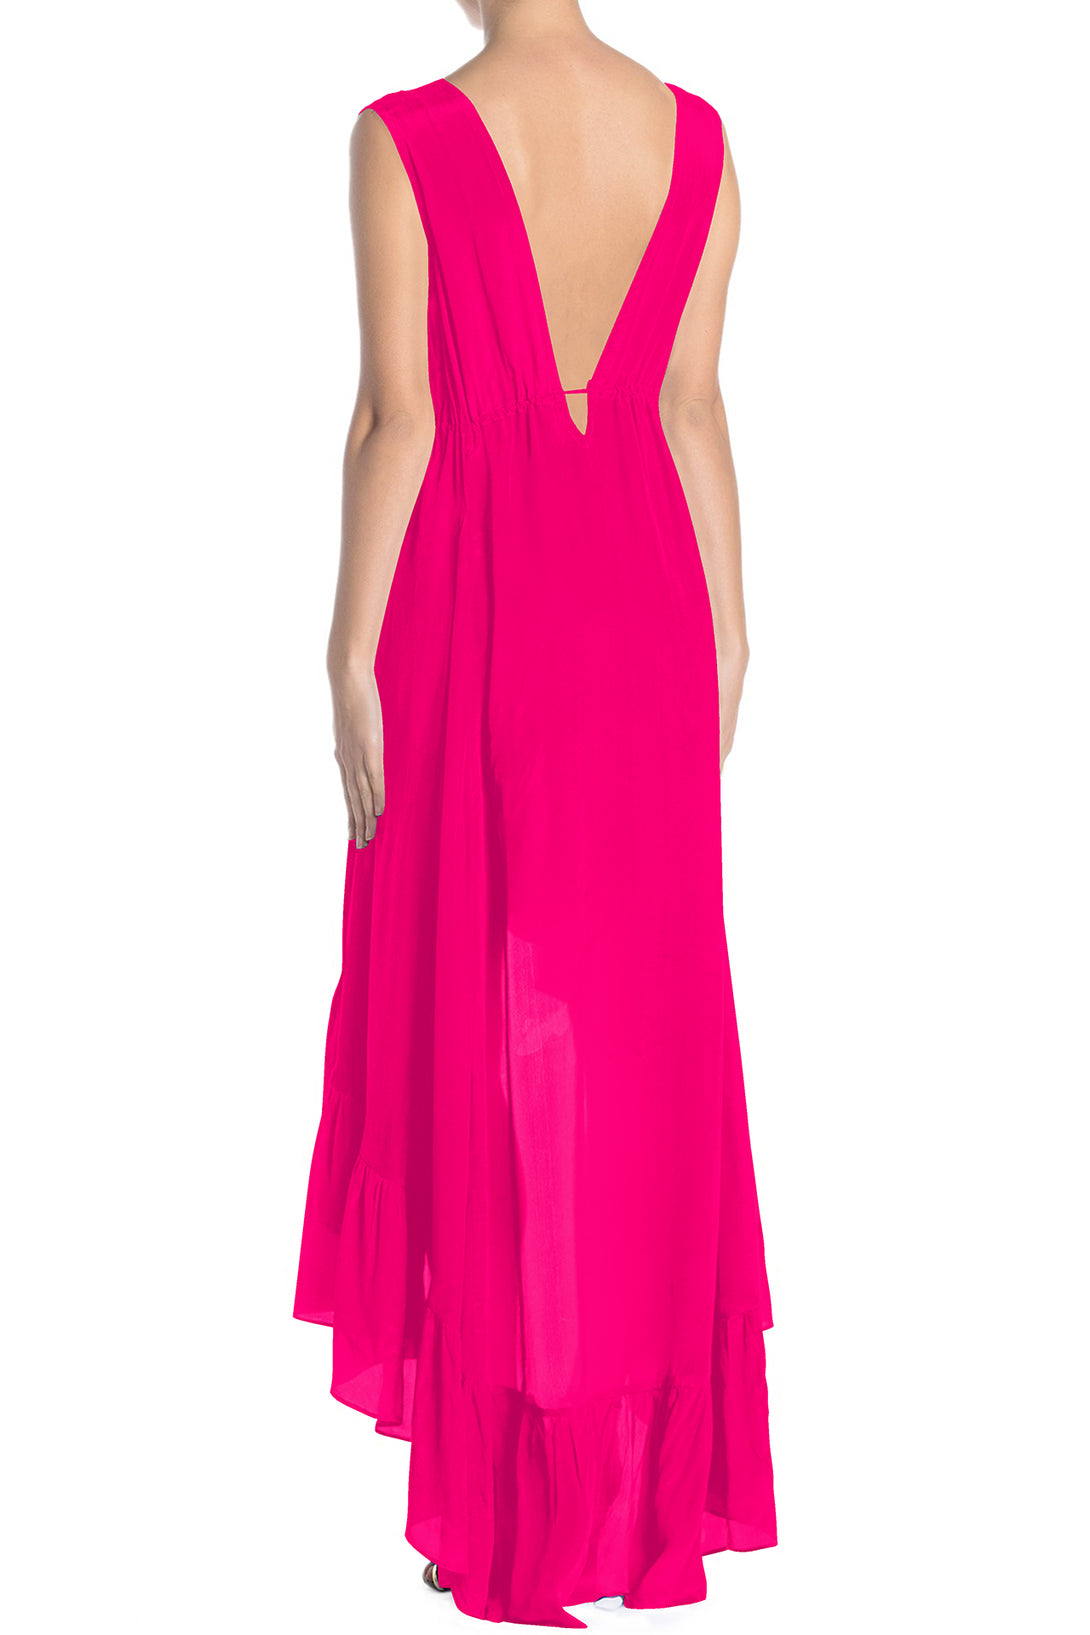  long dress pink colour, long summer dresses for women, Shahida Parides, asymmetrical dress formal,